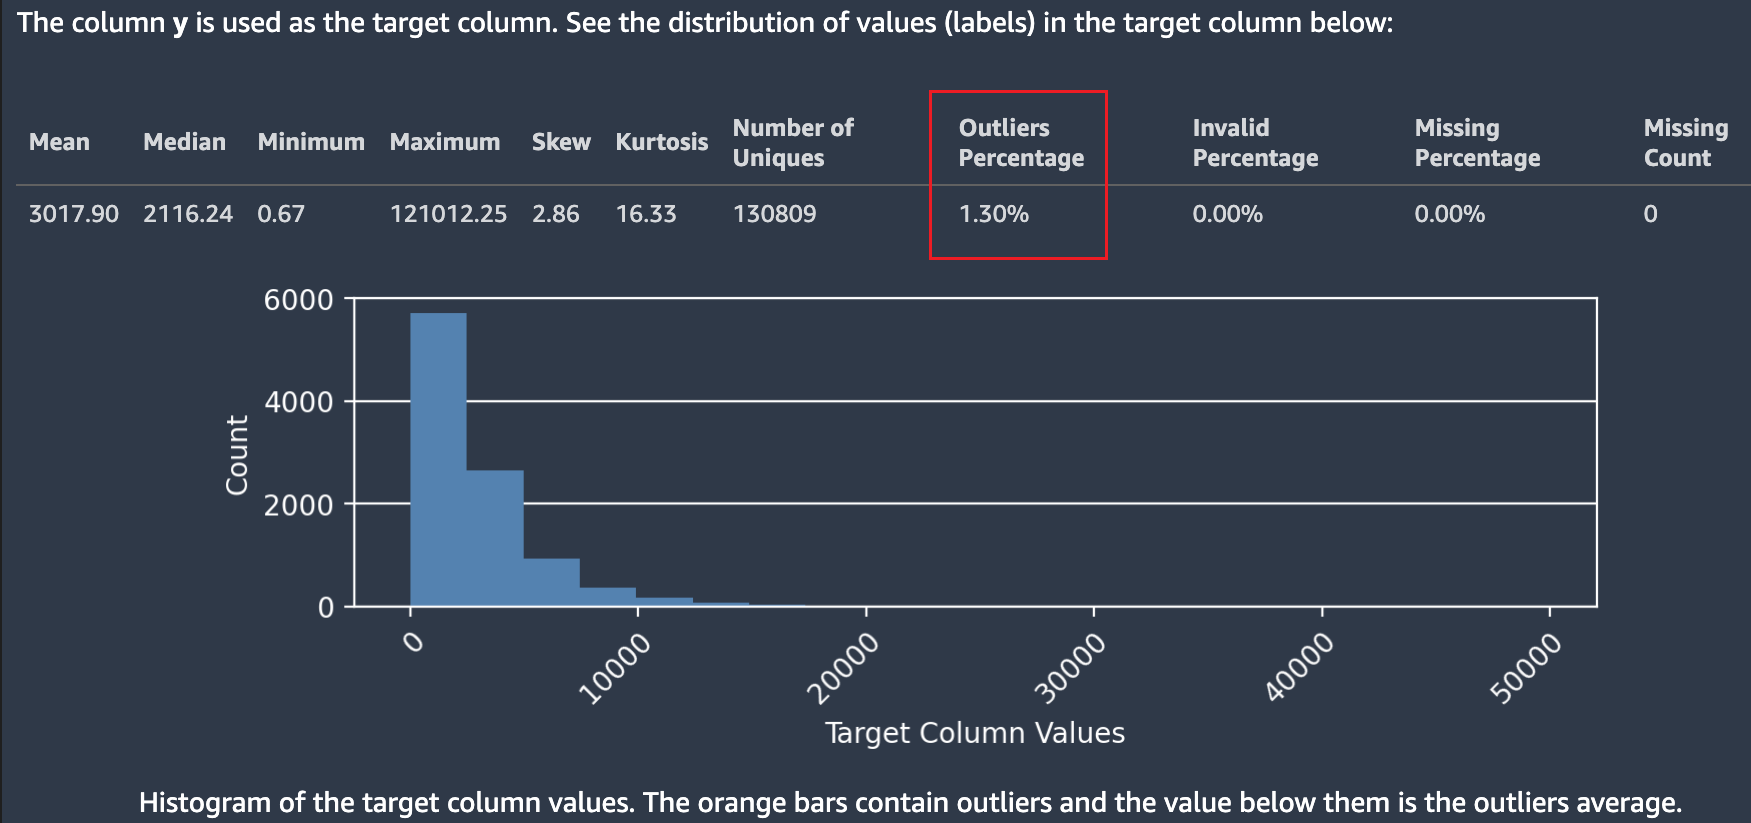 Laporan data autopilot tentang distribusi nilai kolom target.